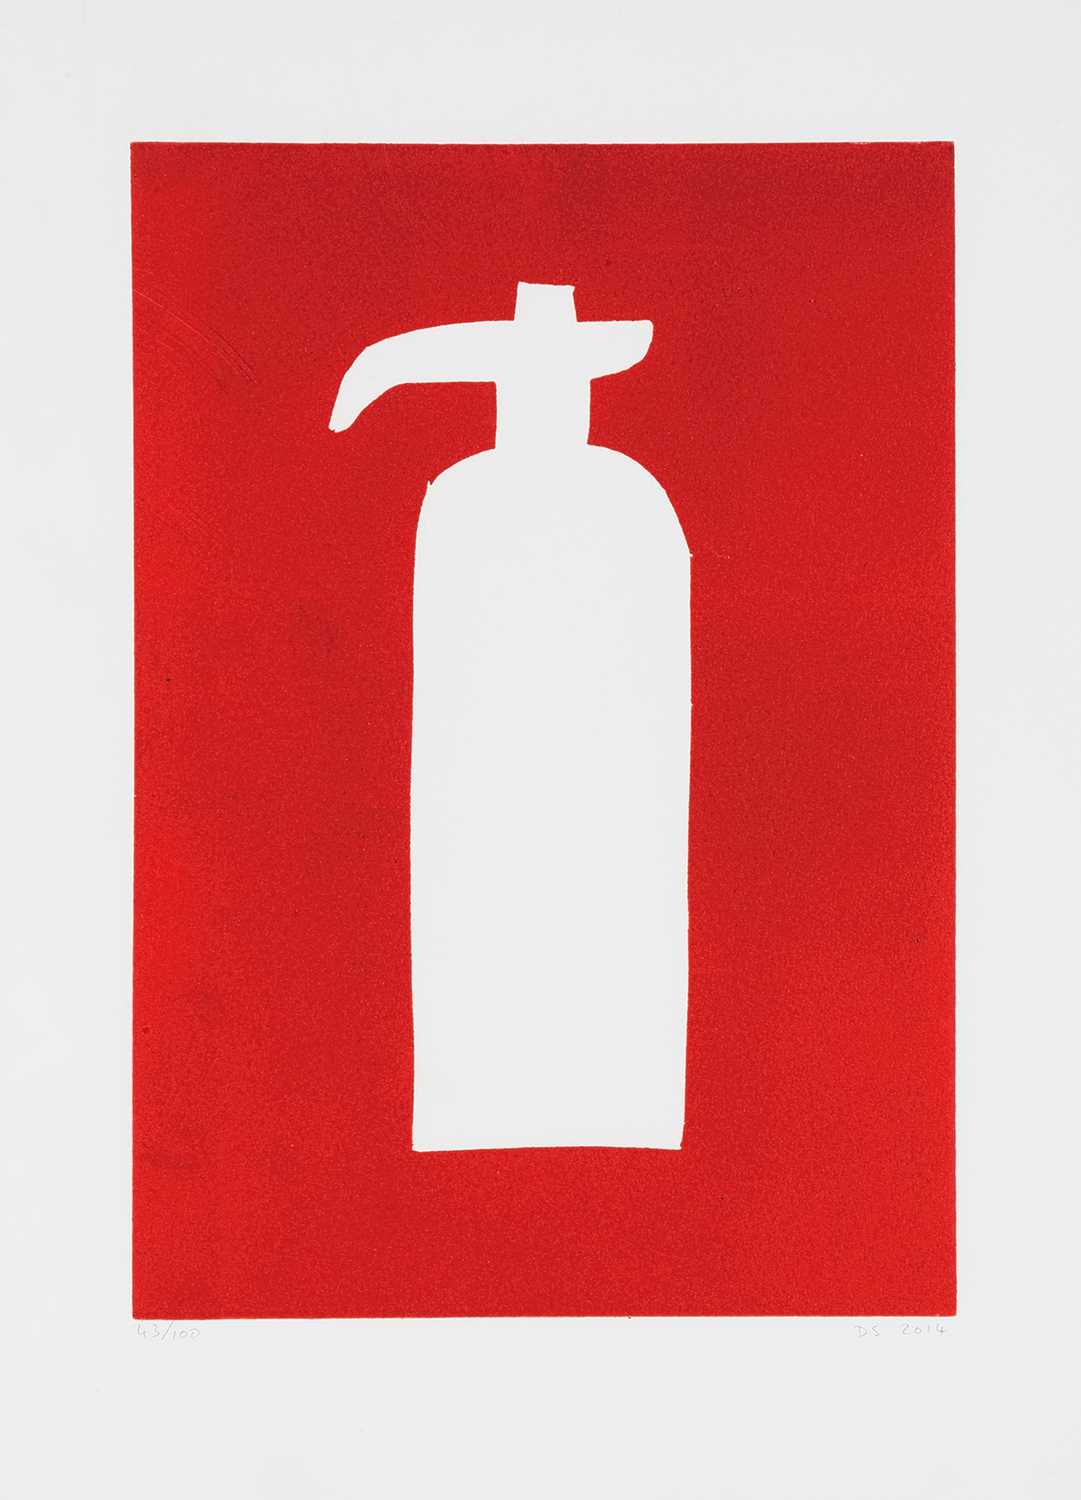 Lot 28 - David Shrigley (British 1968-), 'Fire Hydrant', 2014